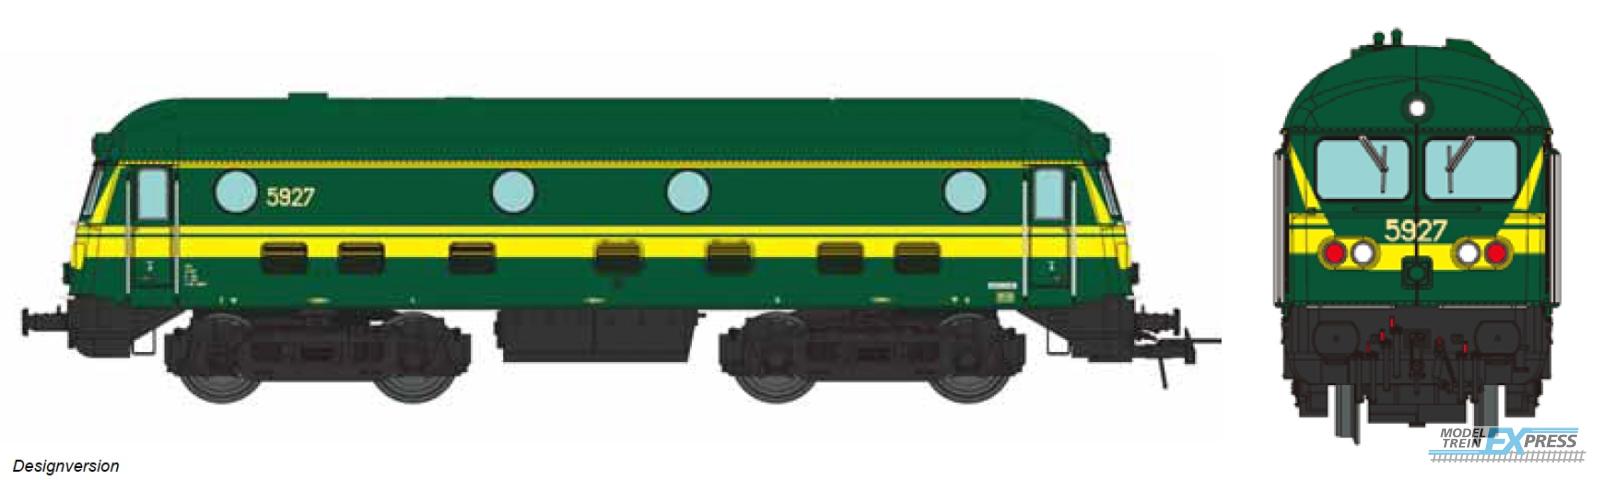 B-Models 9310.04 Diesel 5927, AC. 3-Rail Digital